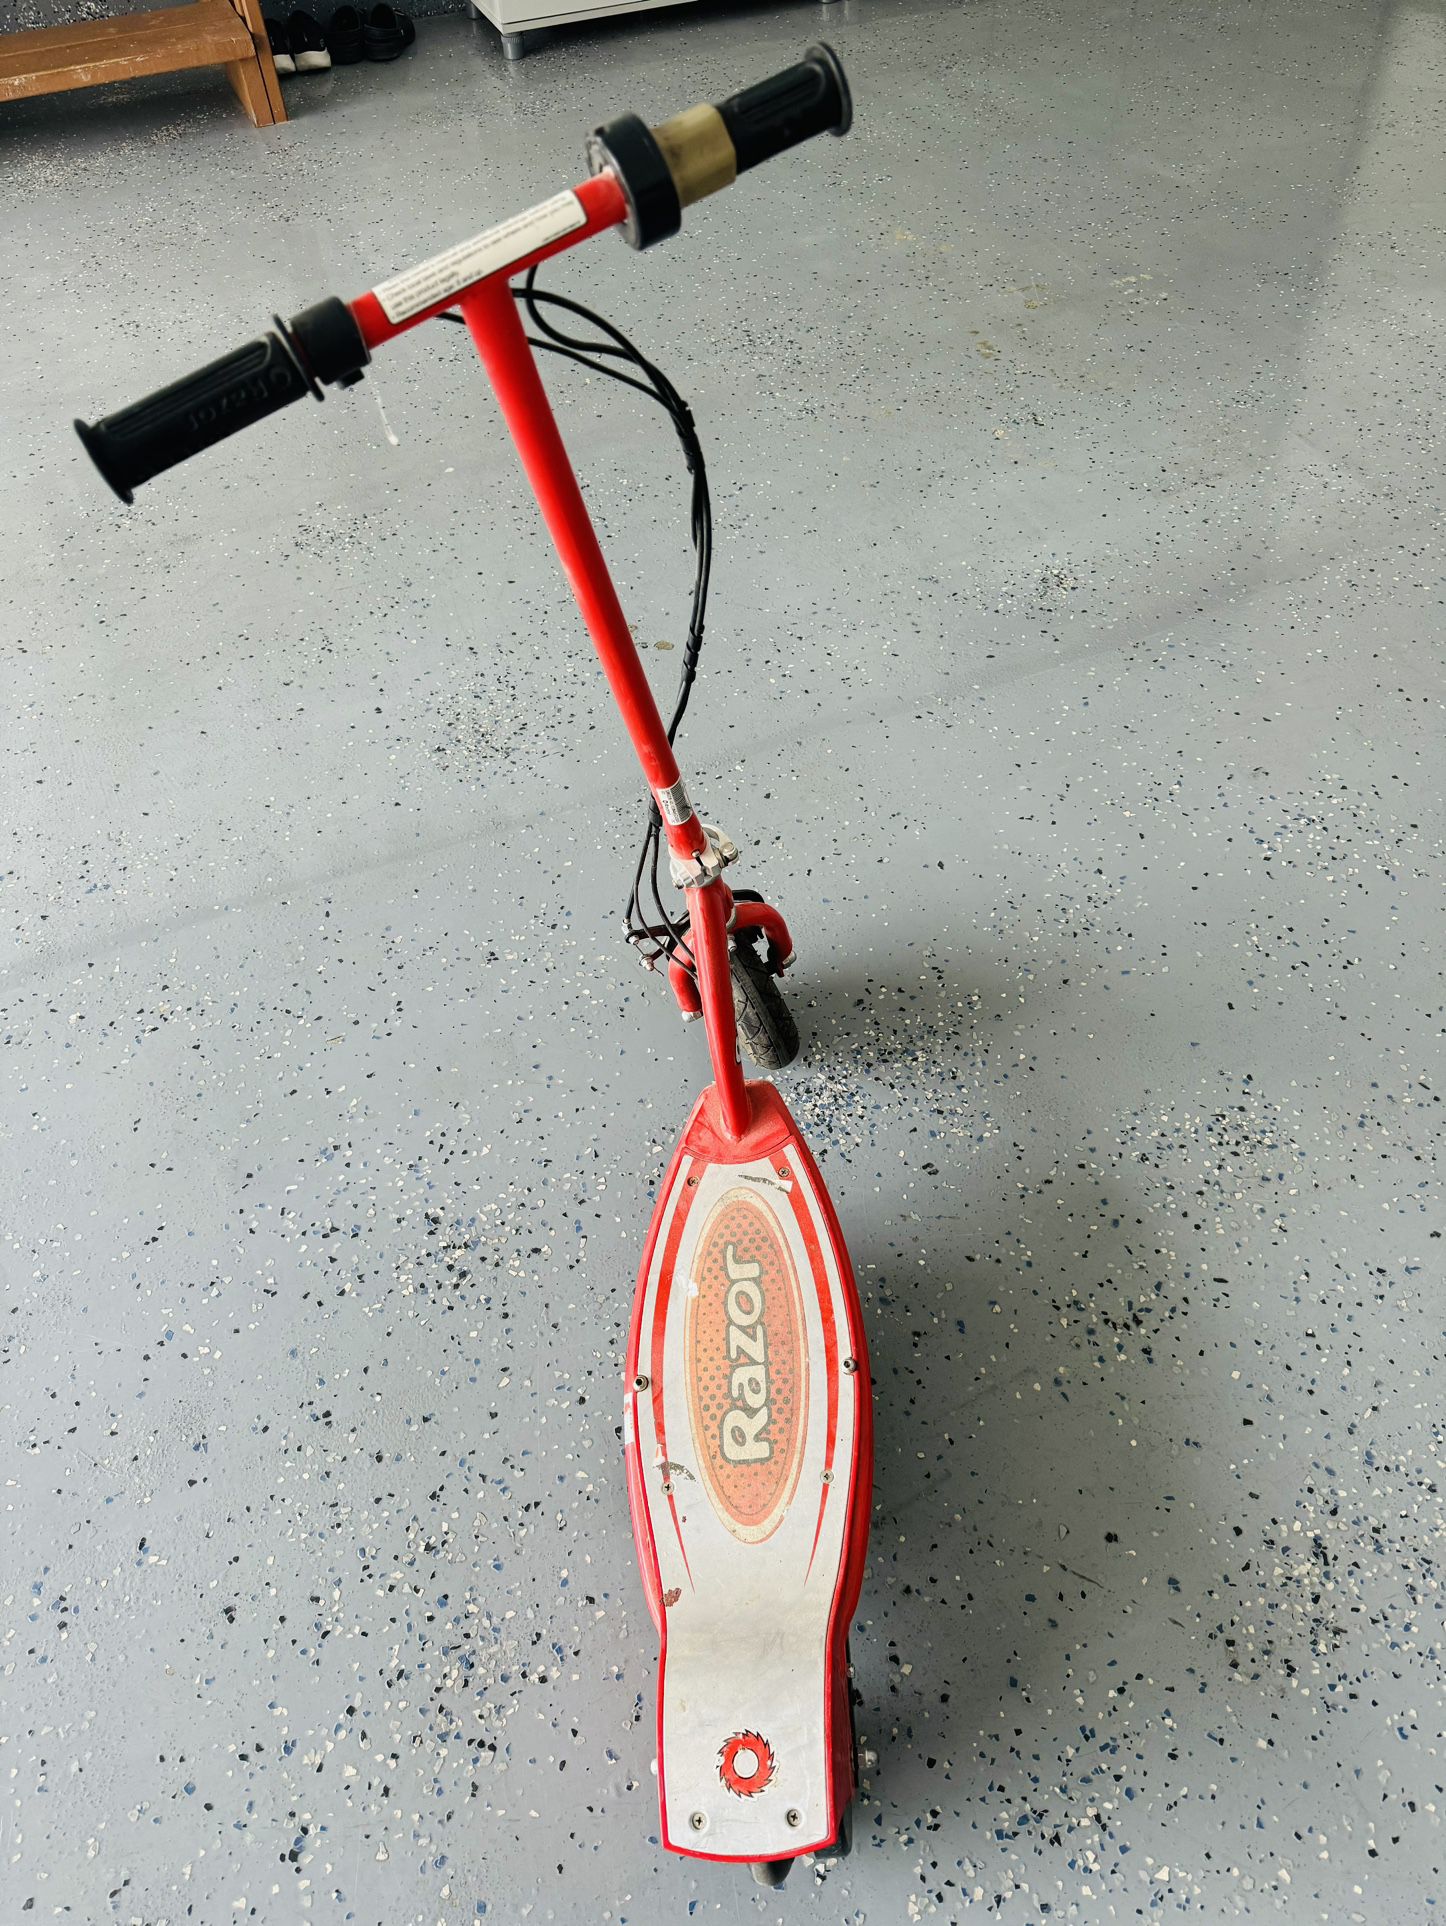 Razor Scooter Electric 